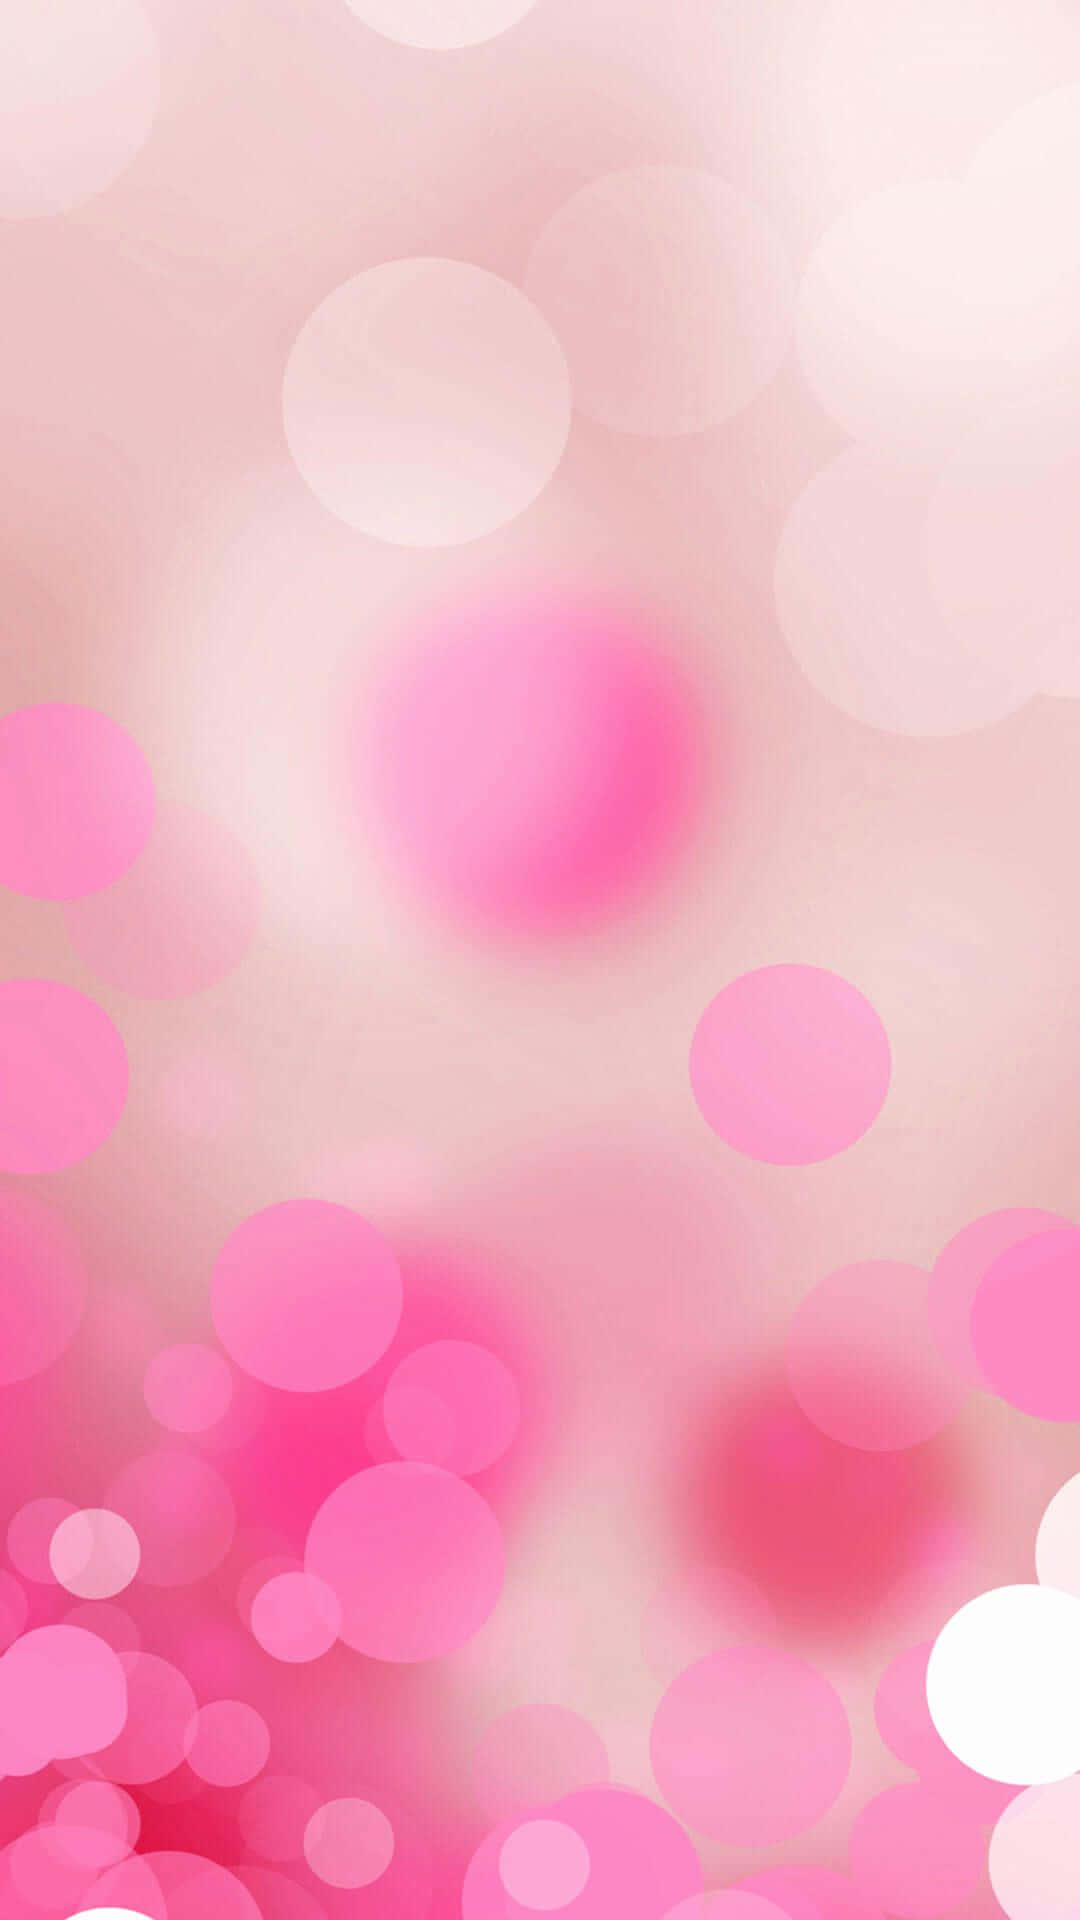 Caption: Dreamy Pink Girly Background